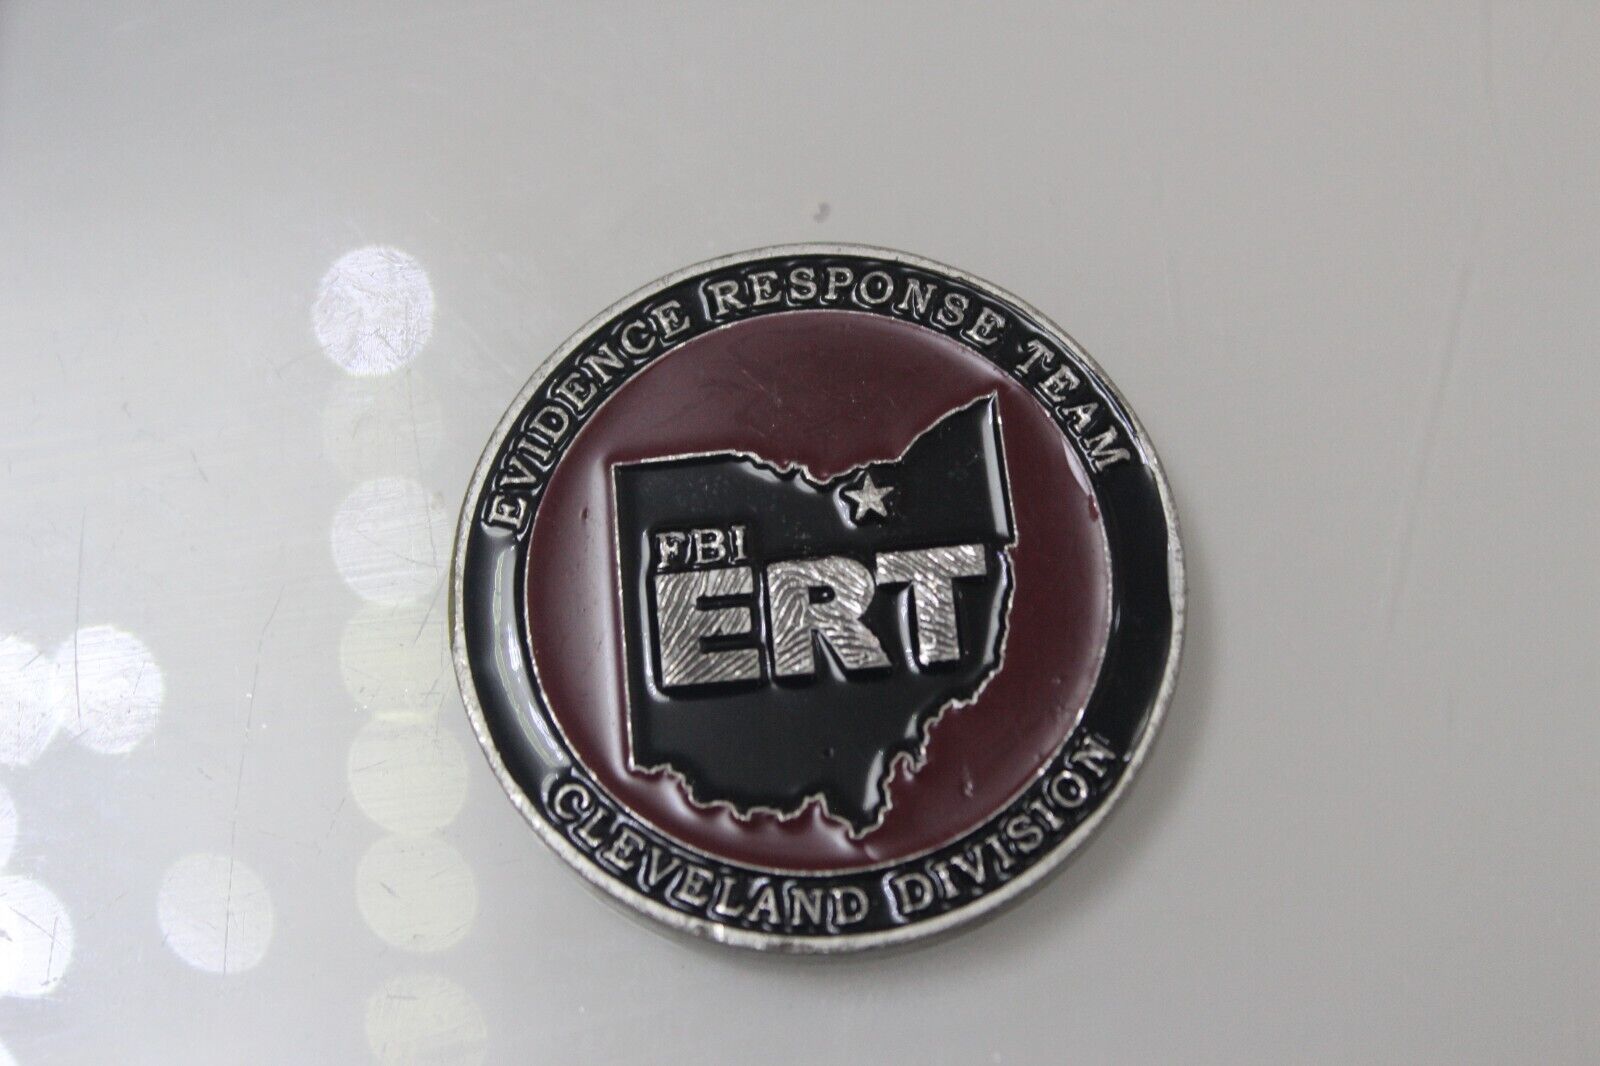 FBI Evidence Response Team Cleveland Division ERT Challenge Coin